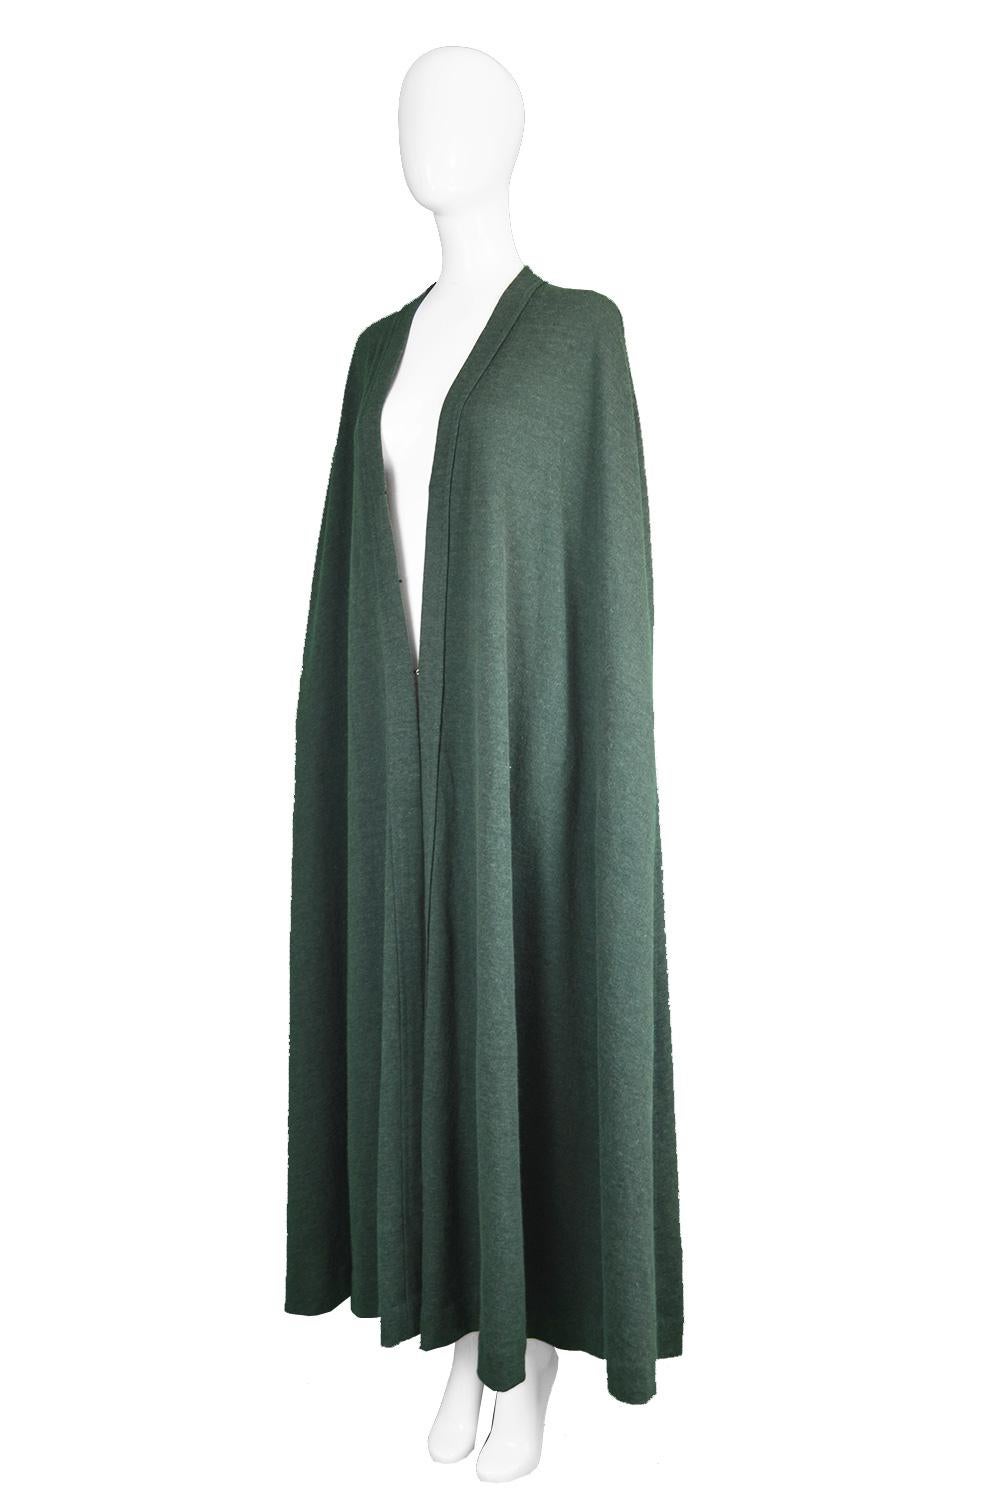 Lanvin Haute Couture Unstructured Green Wool Knit Maxi Cape Cloak, 1970s For Sale 2